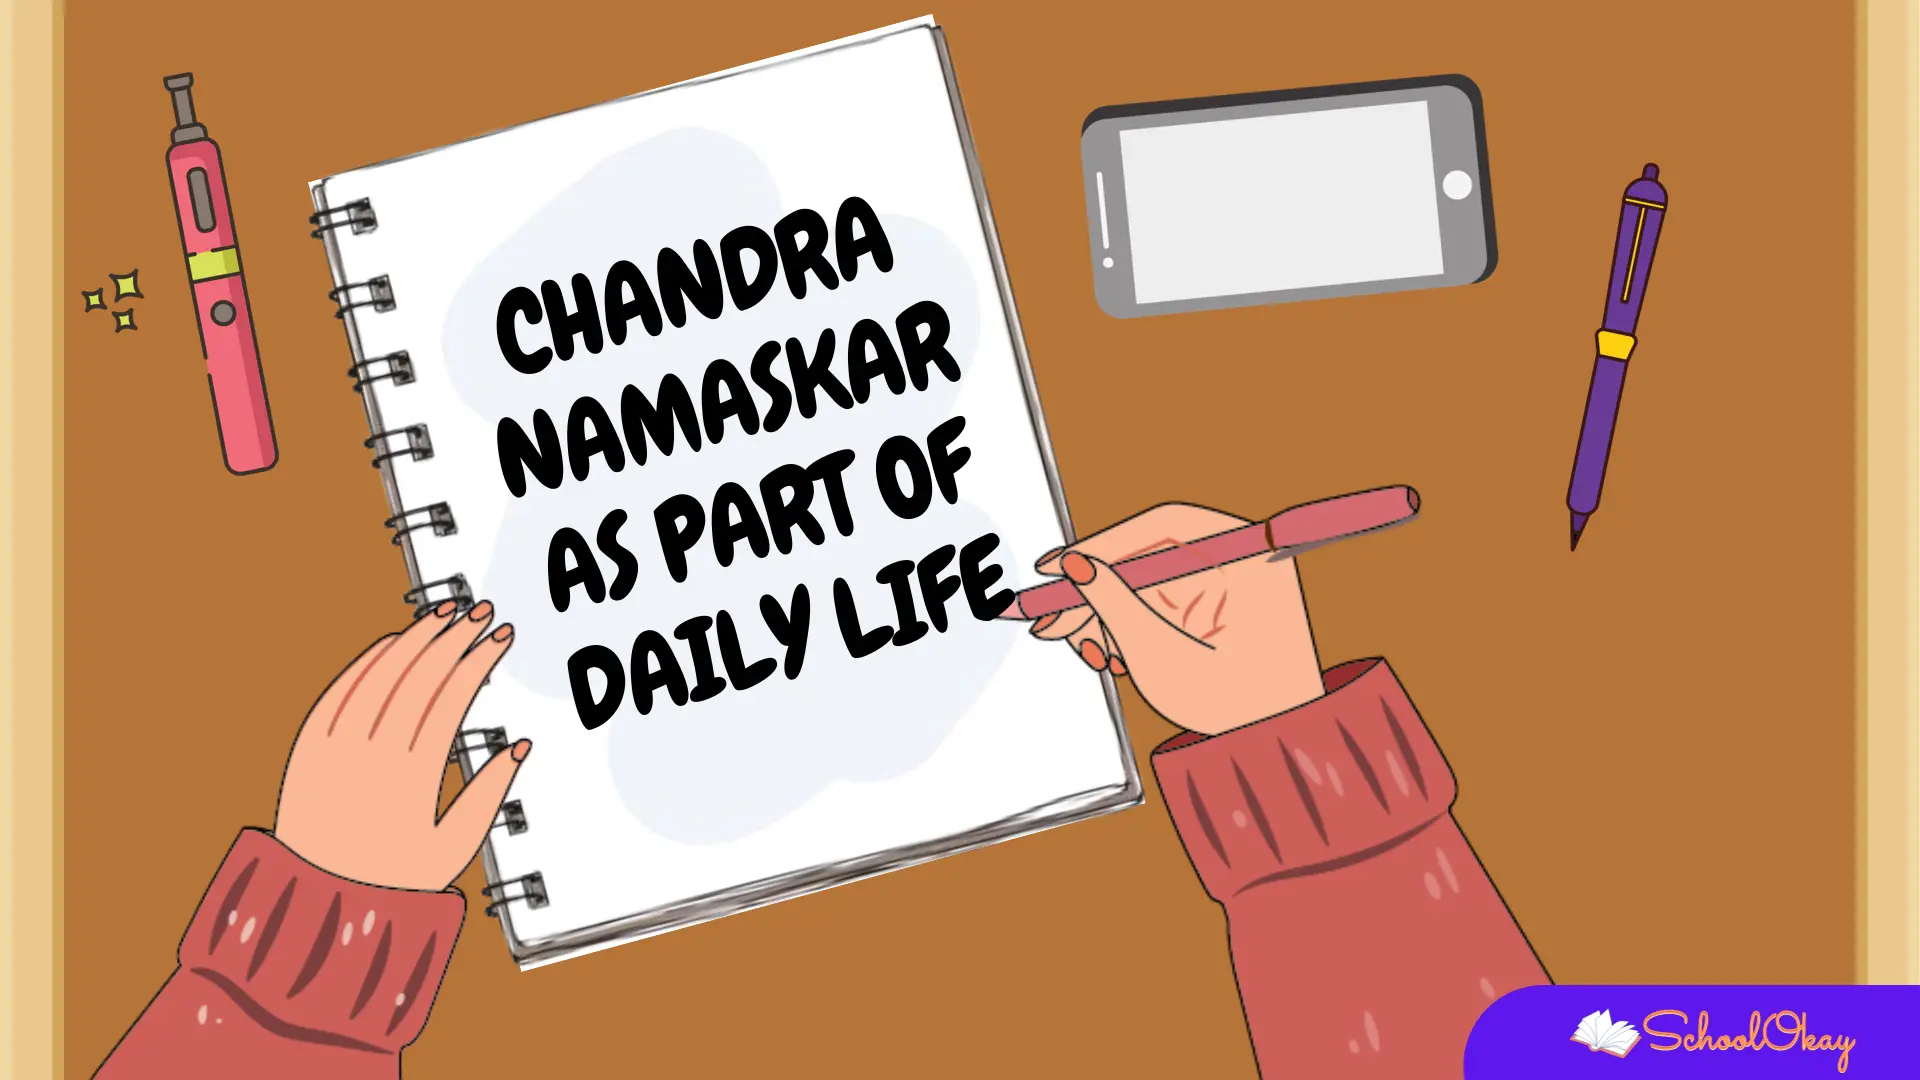 Chandra Namaskar